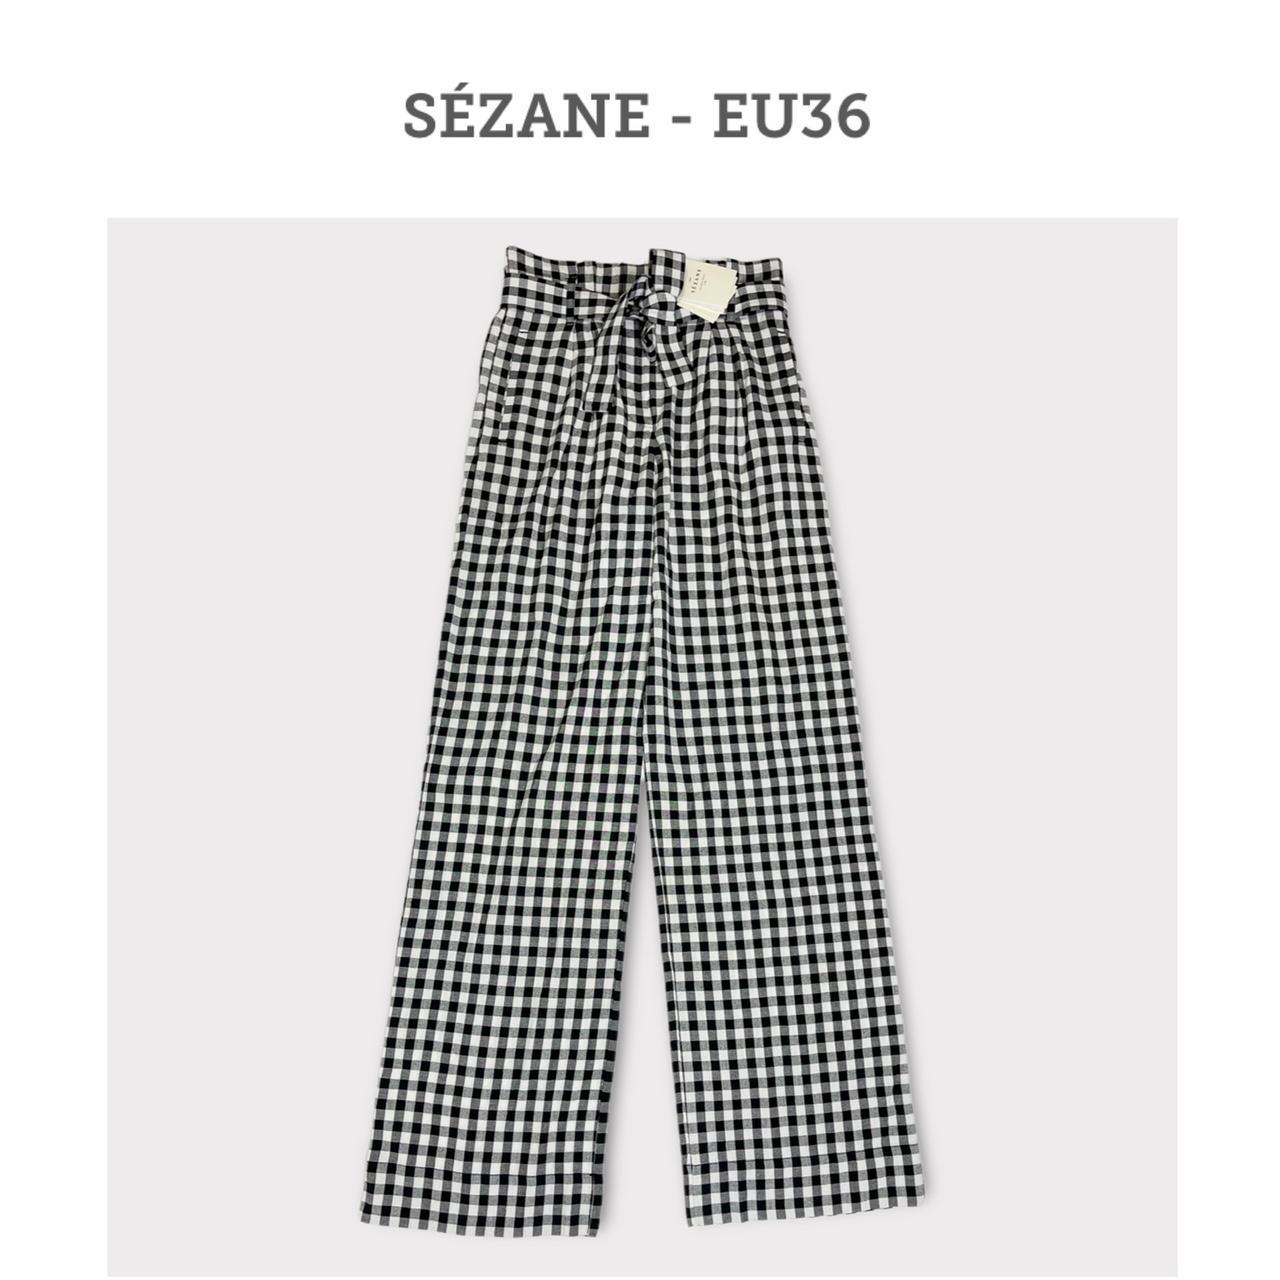 Sézane Women's Black and White Trousers